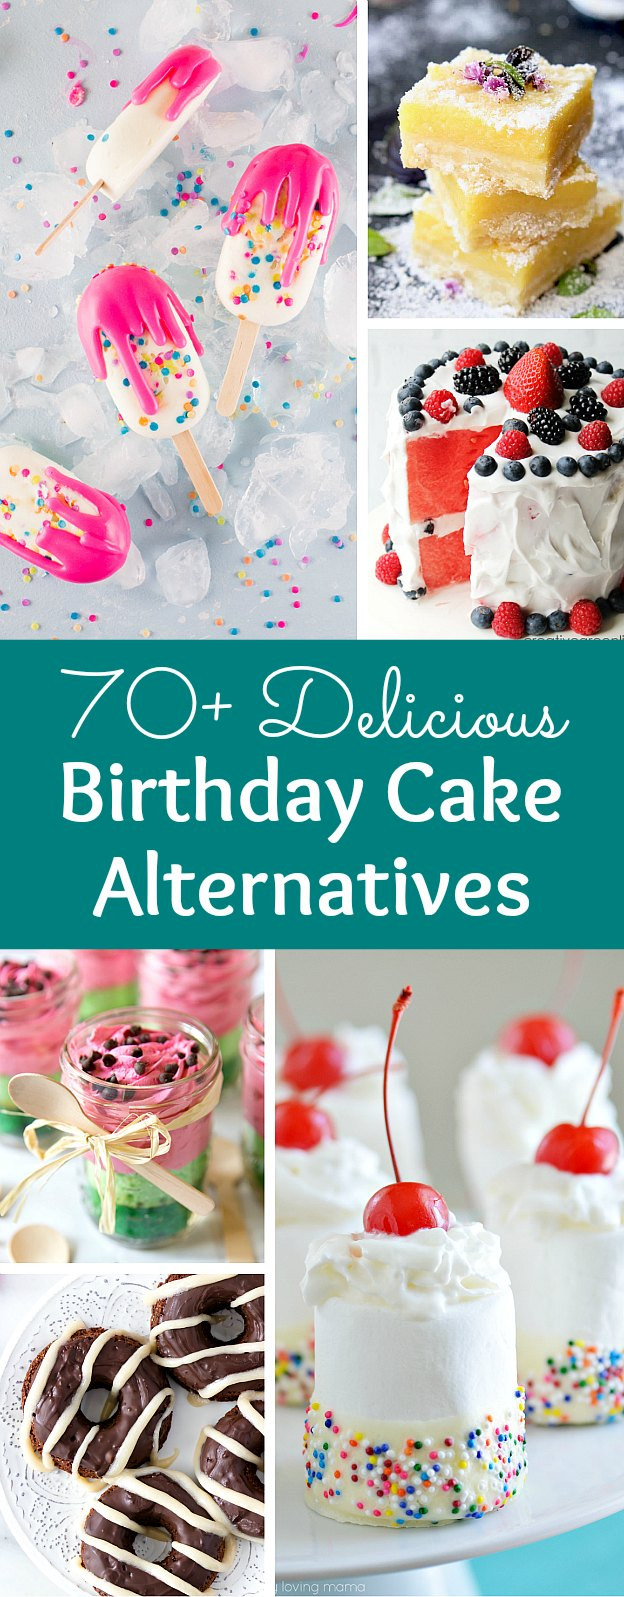 Healthy Birthday Cake Alternatives
 70 Creative Birthday Cake Alternatives